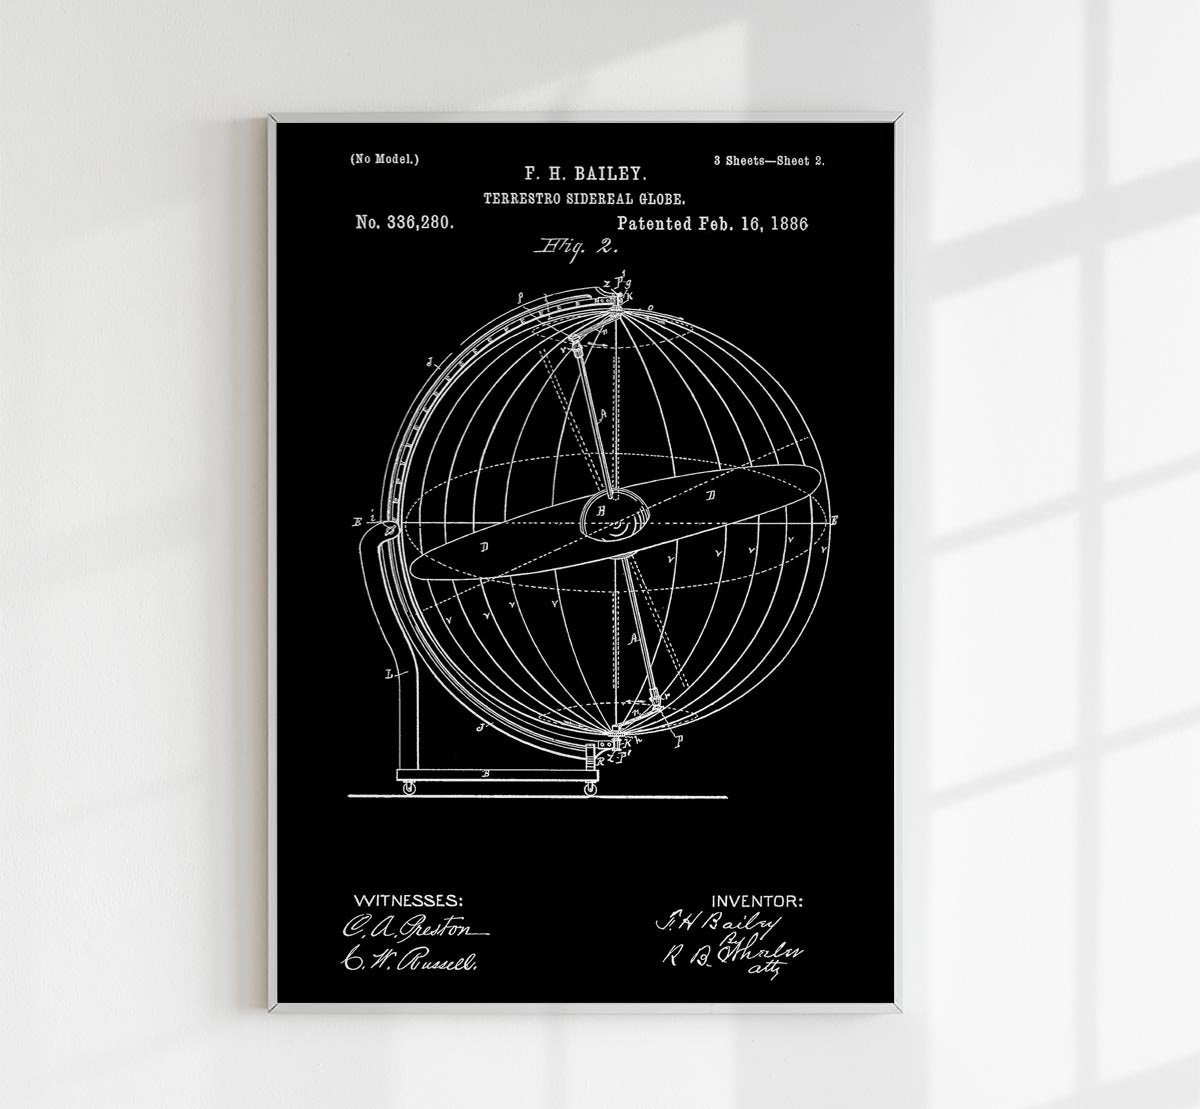 Terrestro Sidereal Globe Patent Poster